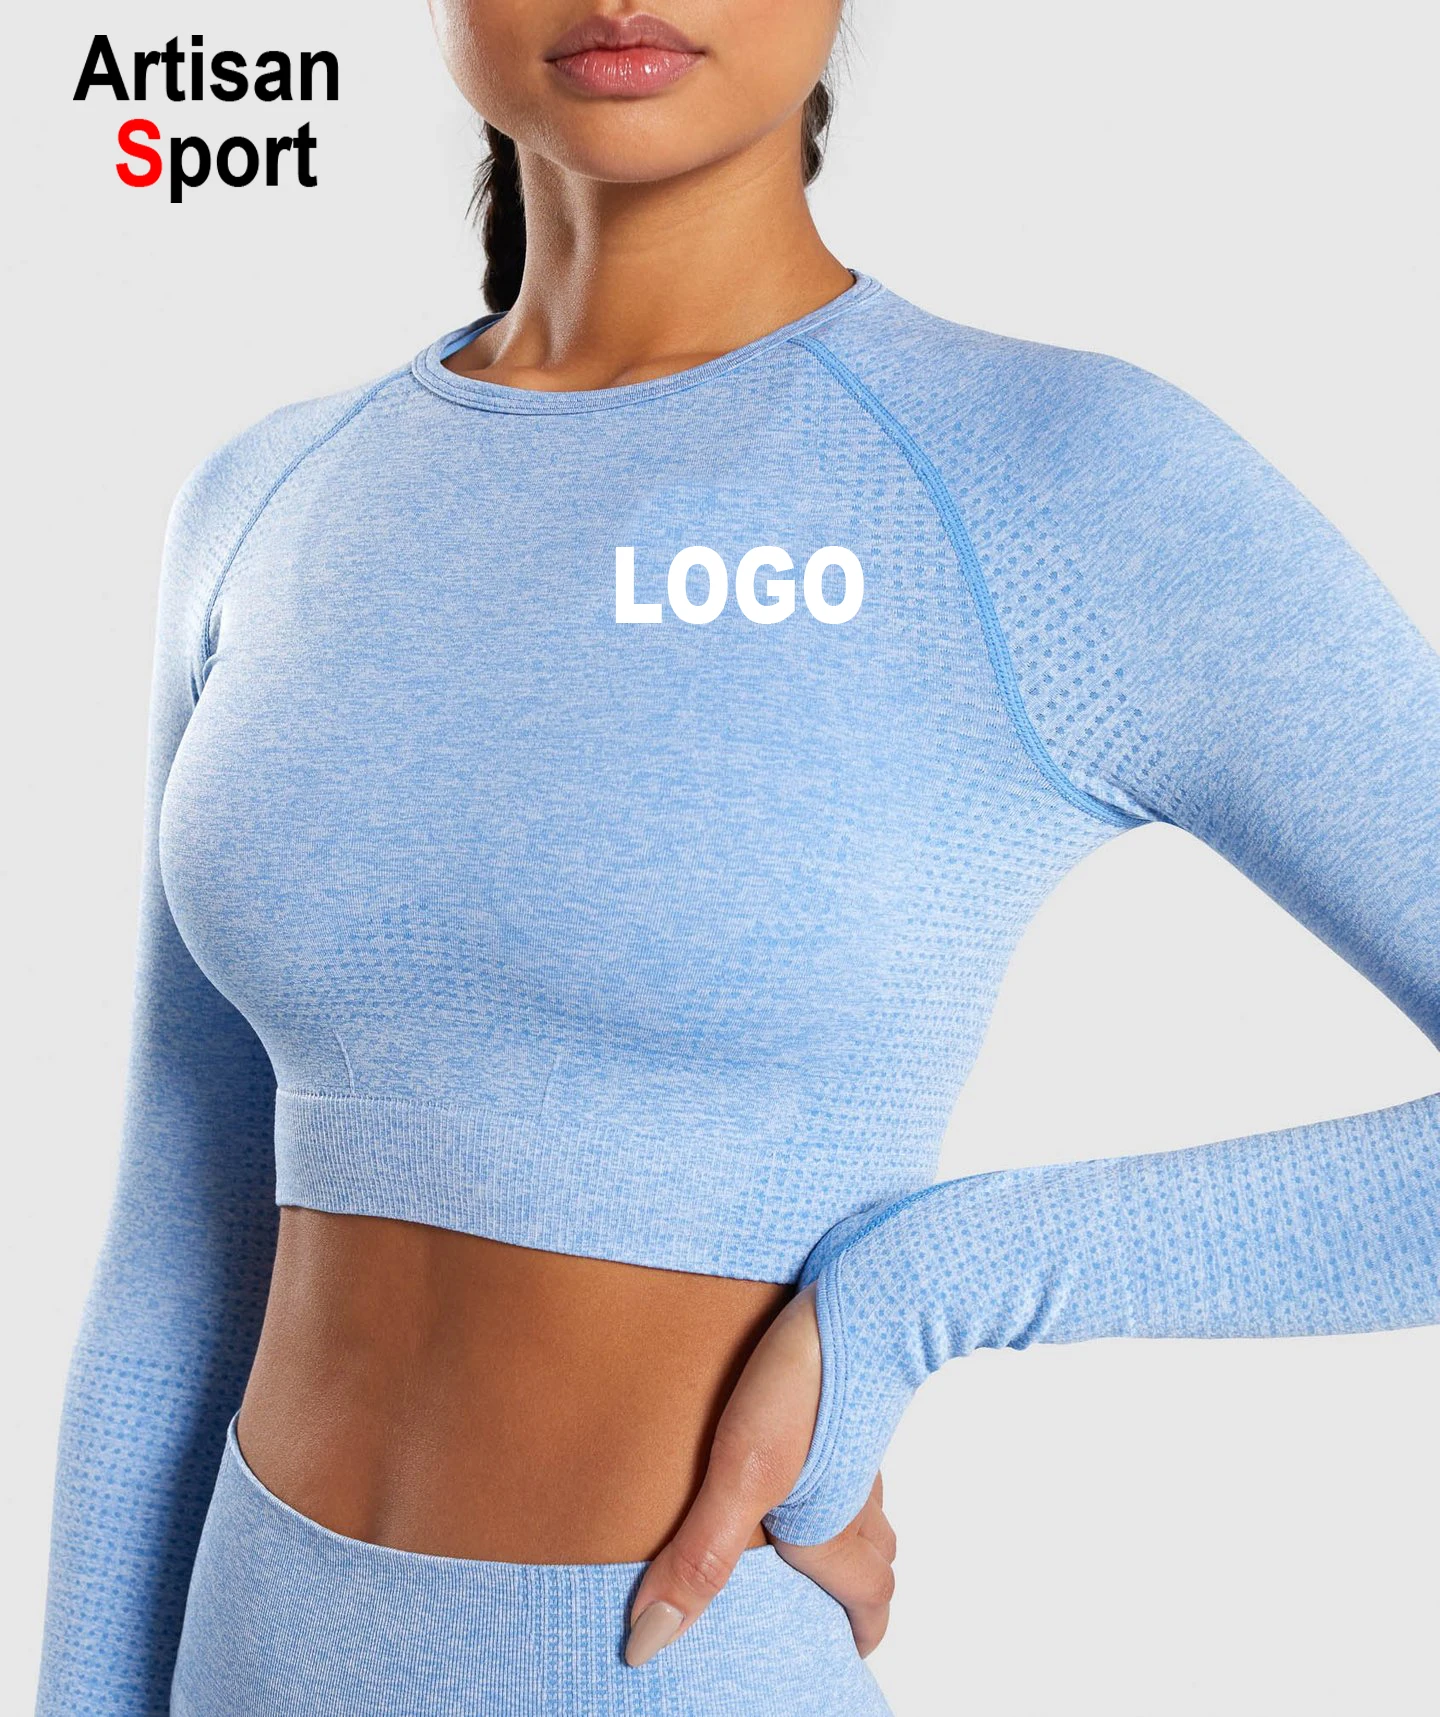 Women Seamless Sport Yoga Crop Top Long Sleeve Gym Workout Fitness T-Shirts Tops